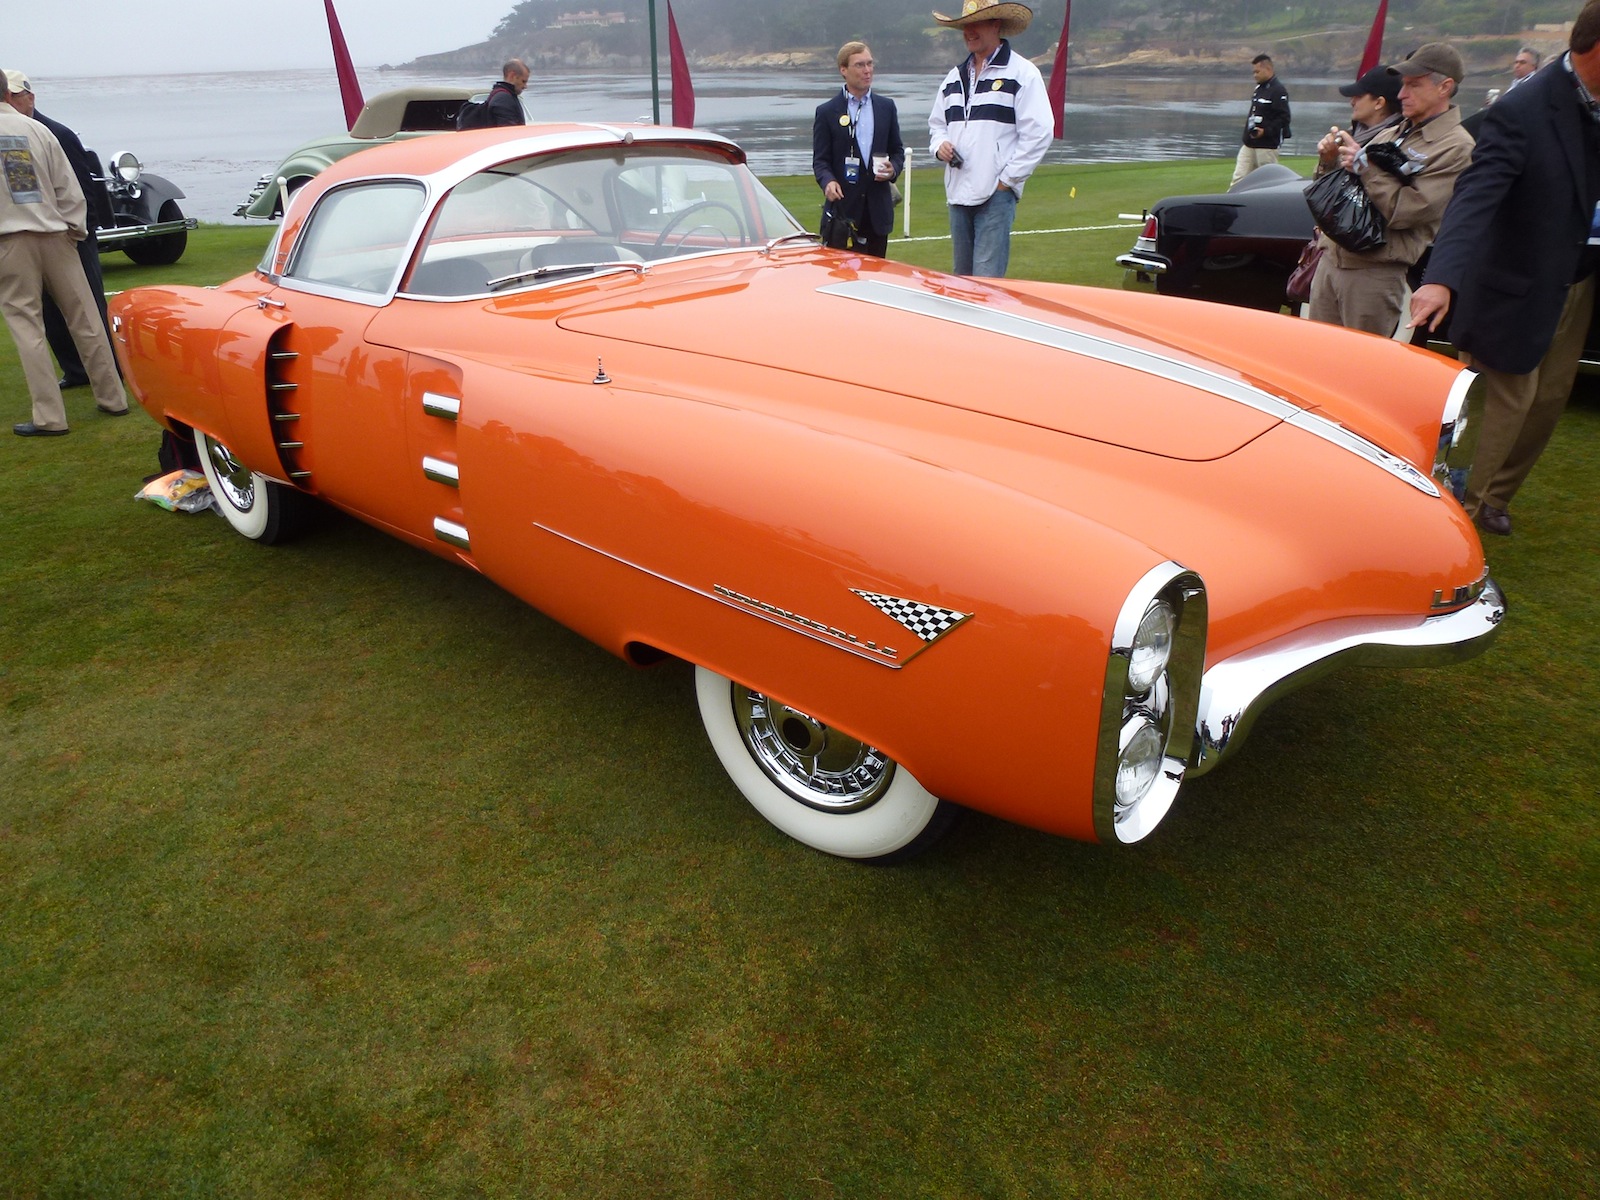  – An Elegant Classic Car At The Pebble Beach Concours d’Elegance